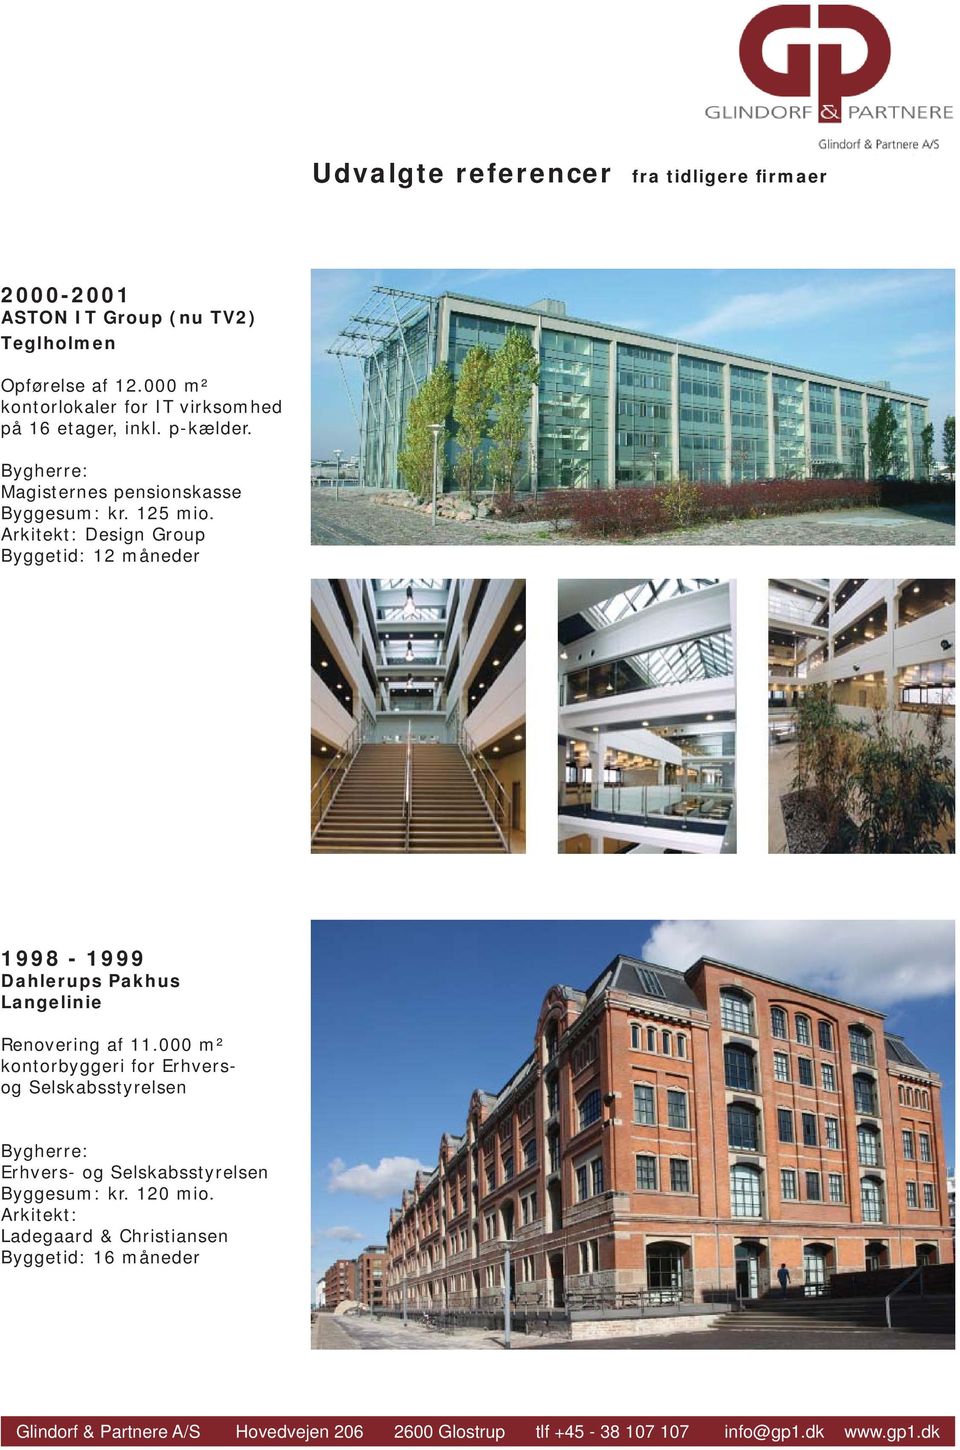 125 mio. Arkitekt: Design Group Byggetid: 12 måneder 1998-1999 Dahlerups Pakhus Langelinie Renovering af 11.